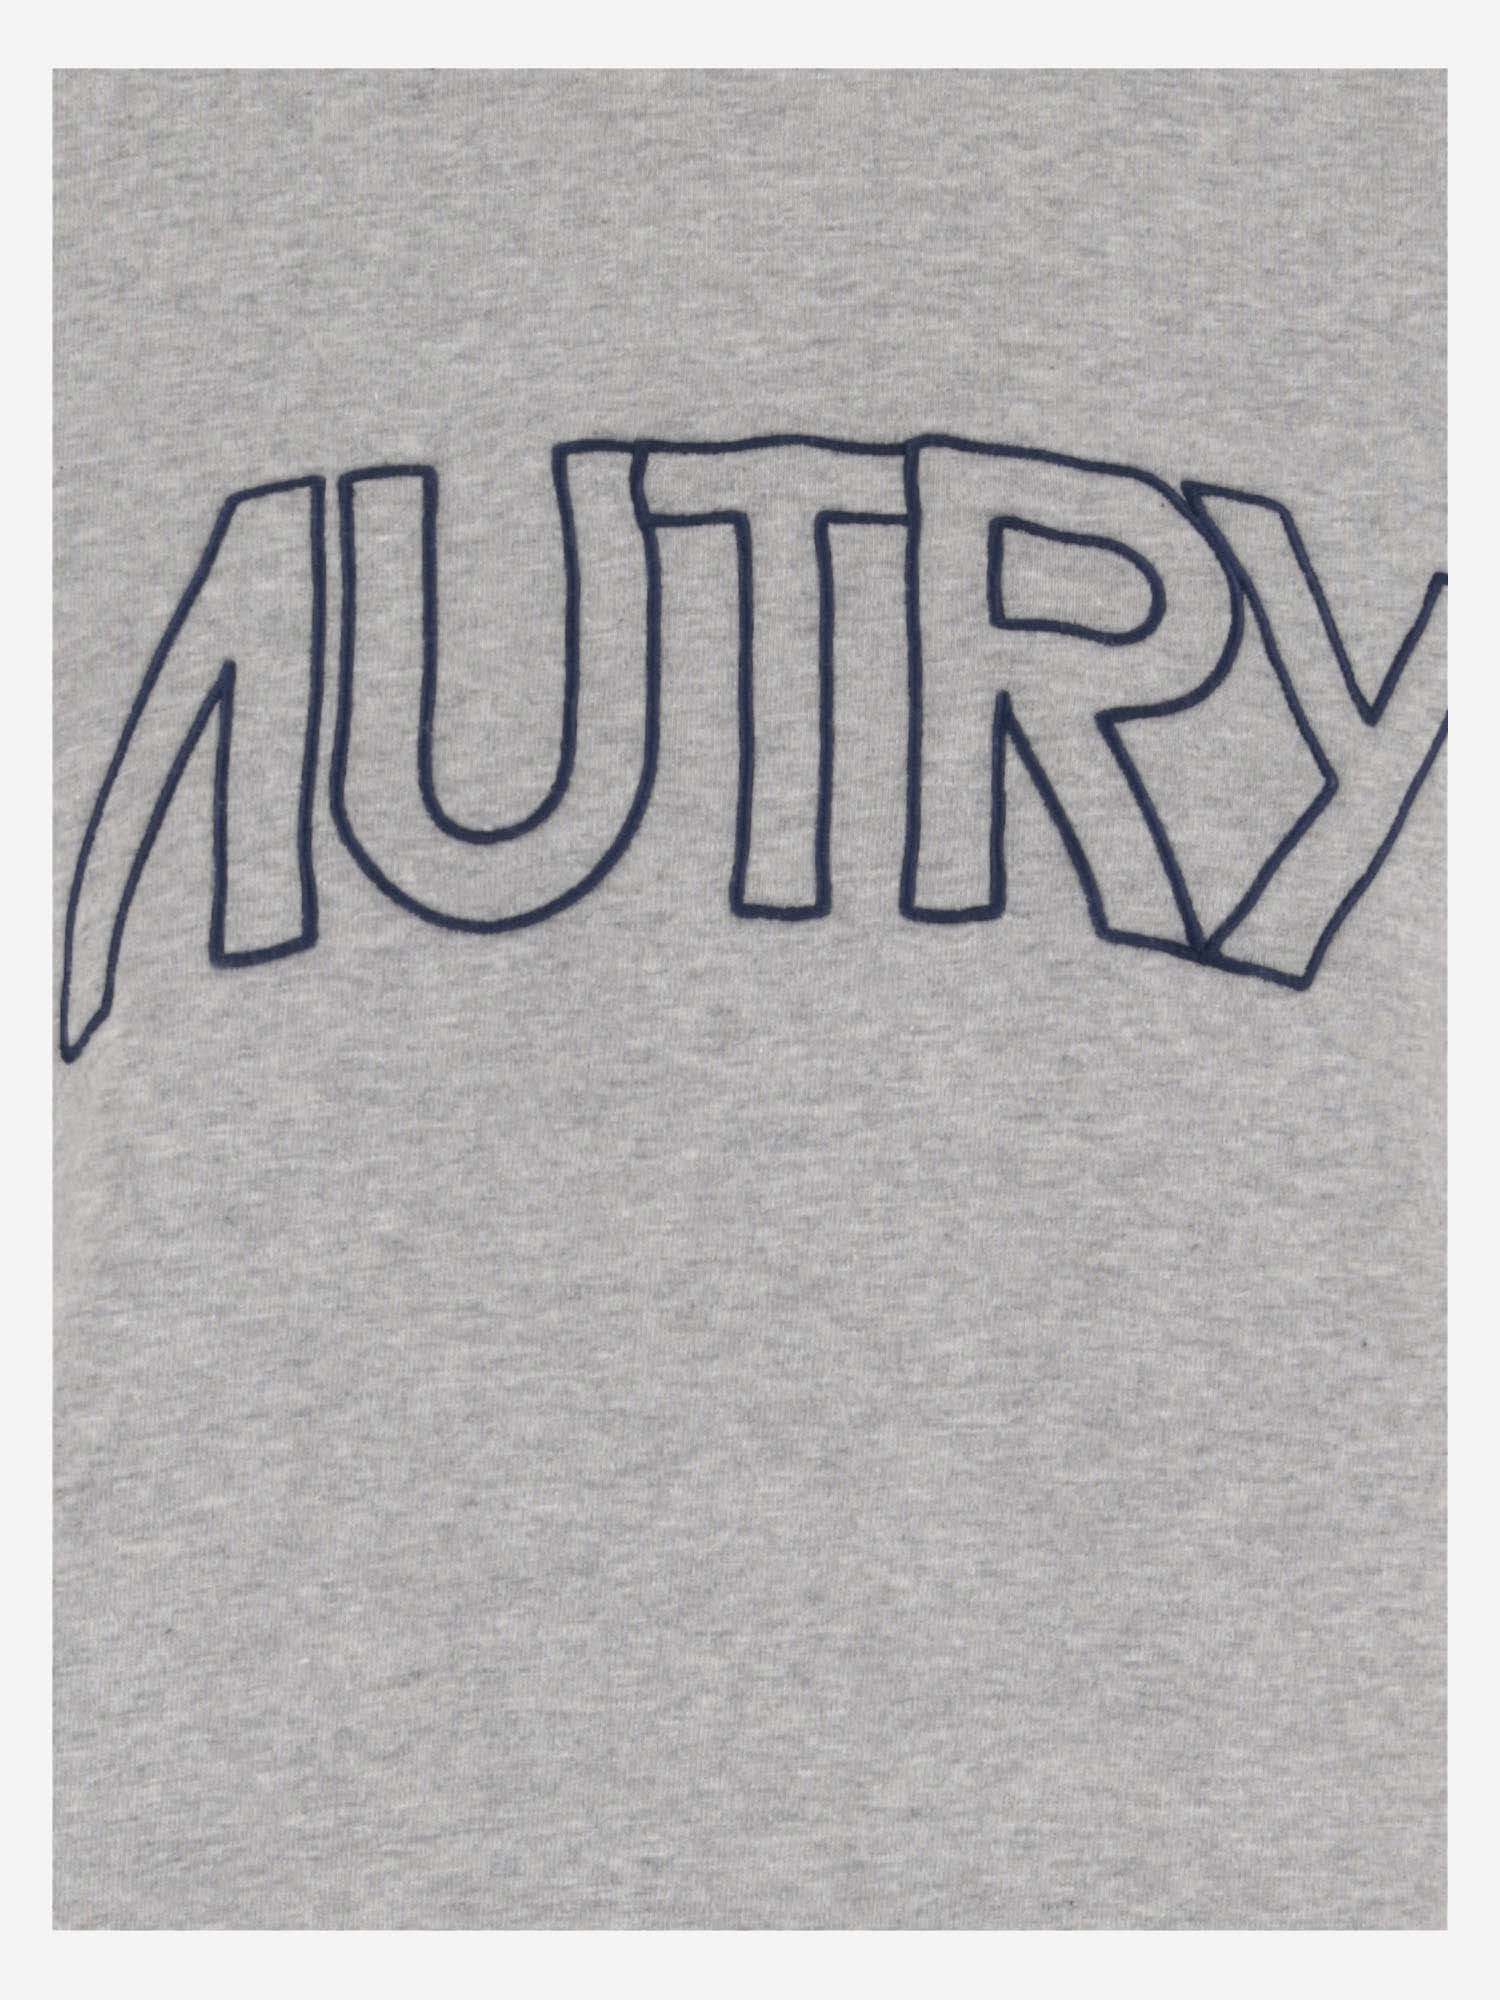 Shop Autry Cotton Sweatshirt With Logo In Grey